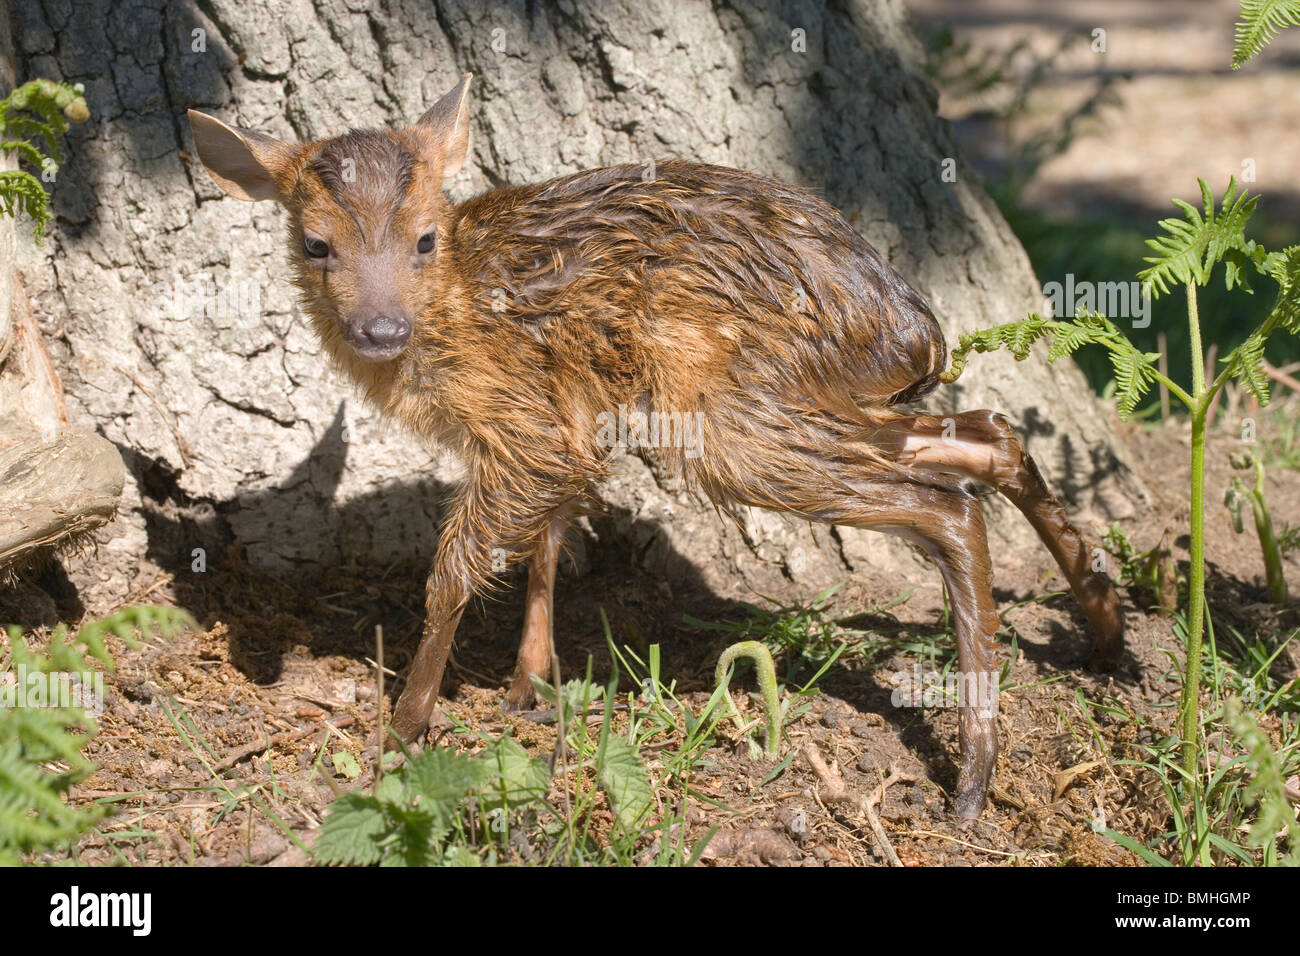 Muntjac Deer (Muntiacus reevesi). Fawn, appena nato, sui suoi piedi per la prima volta. Foto Stock